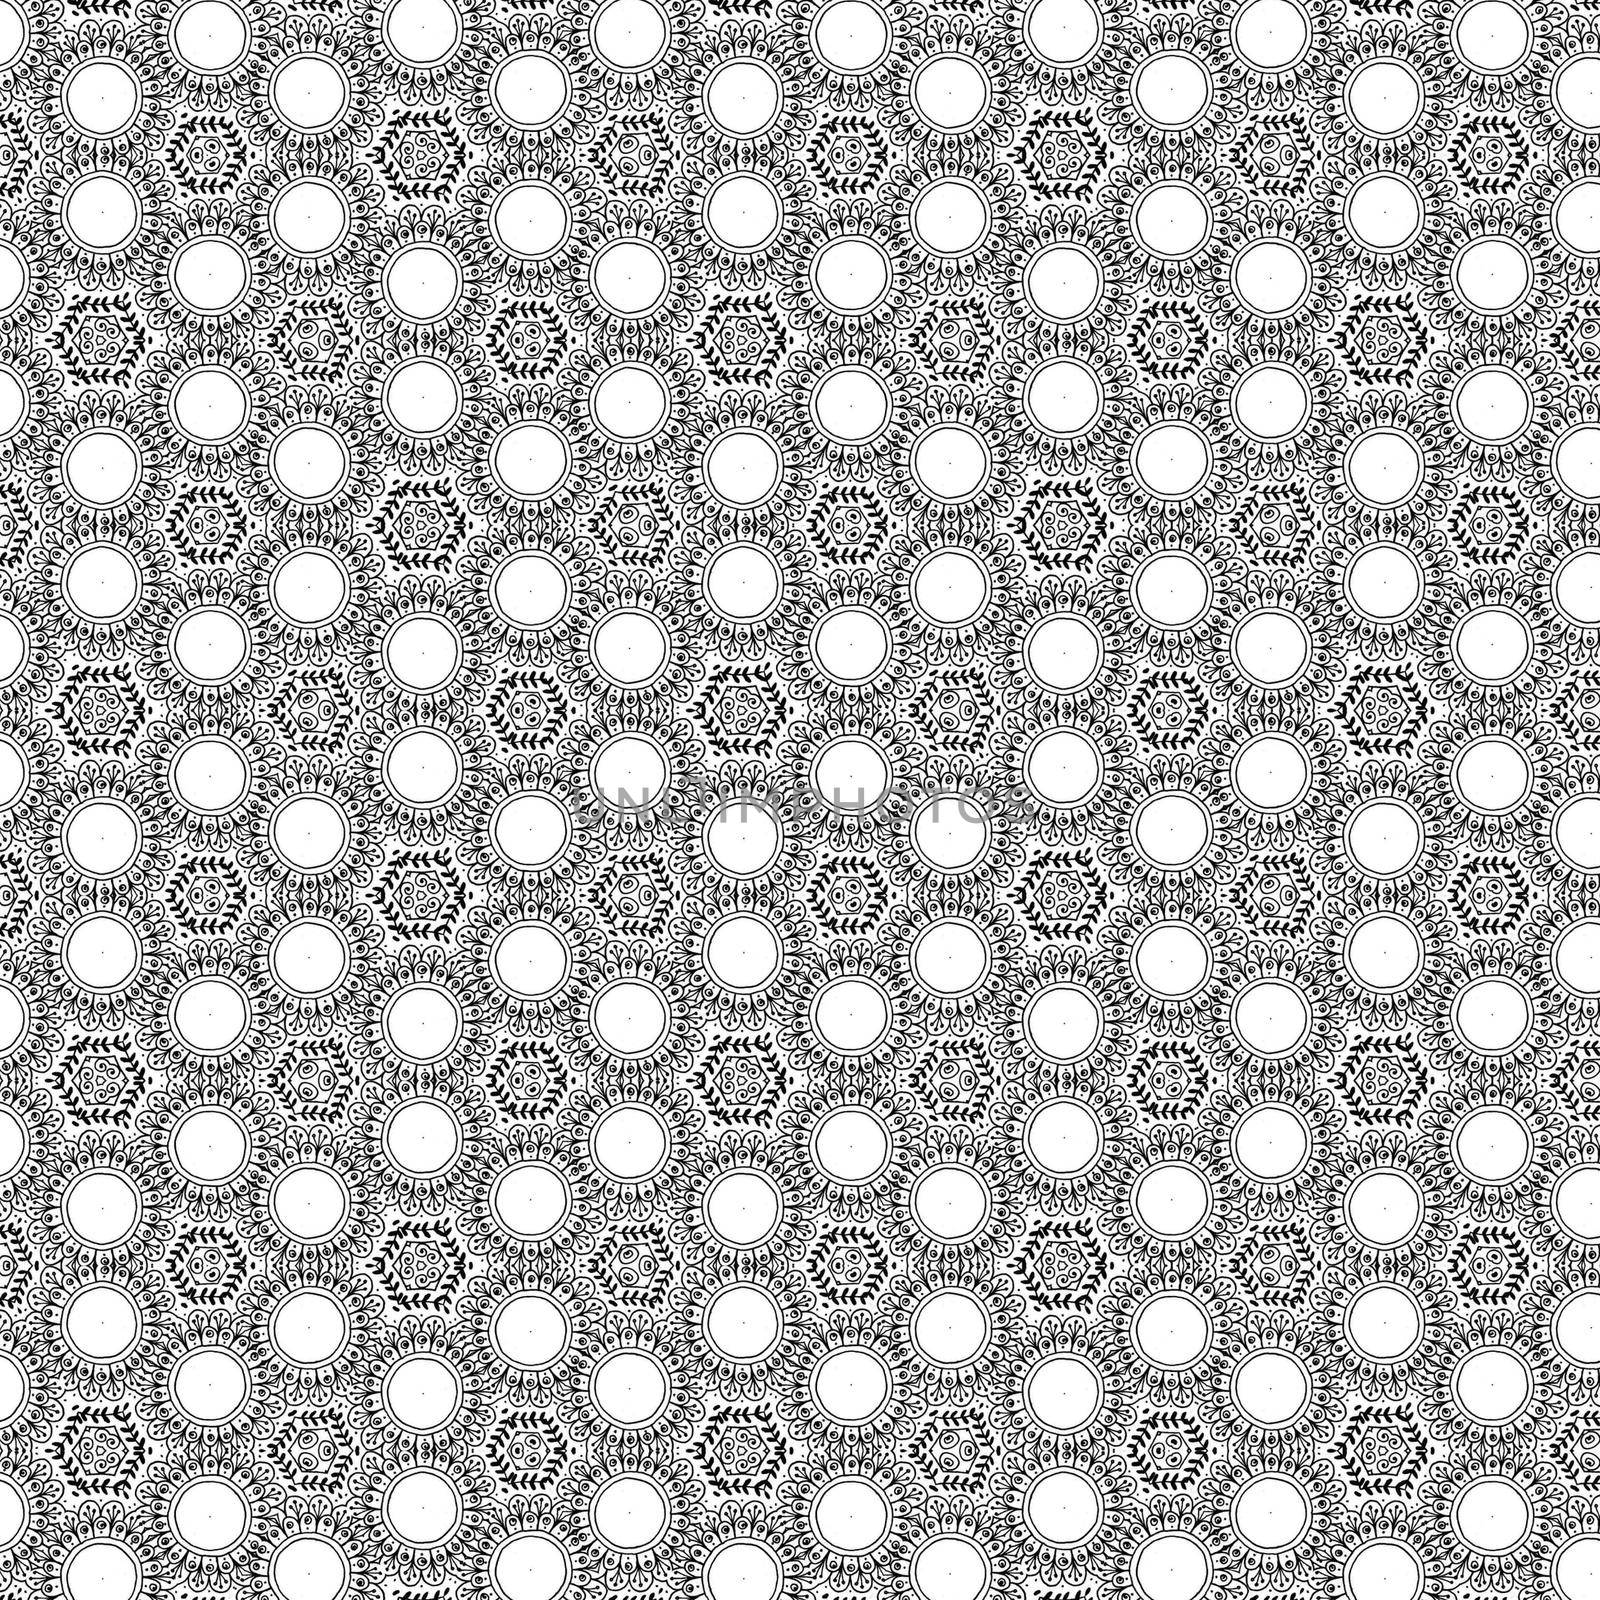 Beautiful and elegant monochromatic and grey symmetrical mandala designs on solid sheet of wallpaper